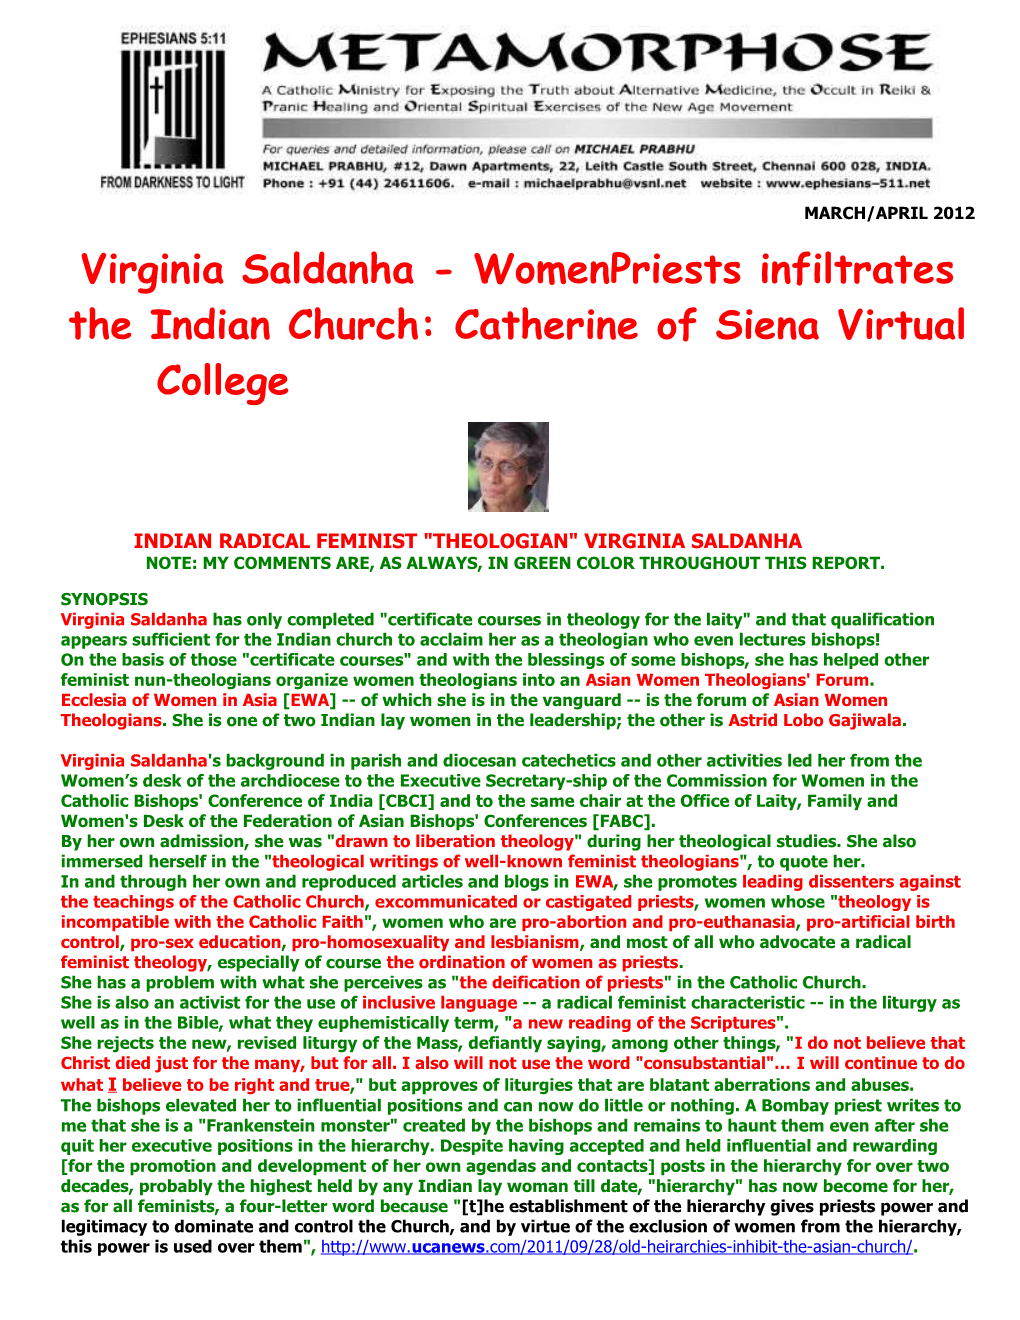 Virginia Saldanha - Womenpriests Infiltrates the Indian Church: Catherine of Siena Virtual